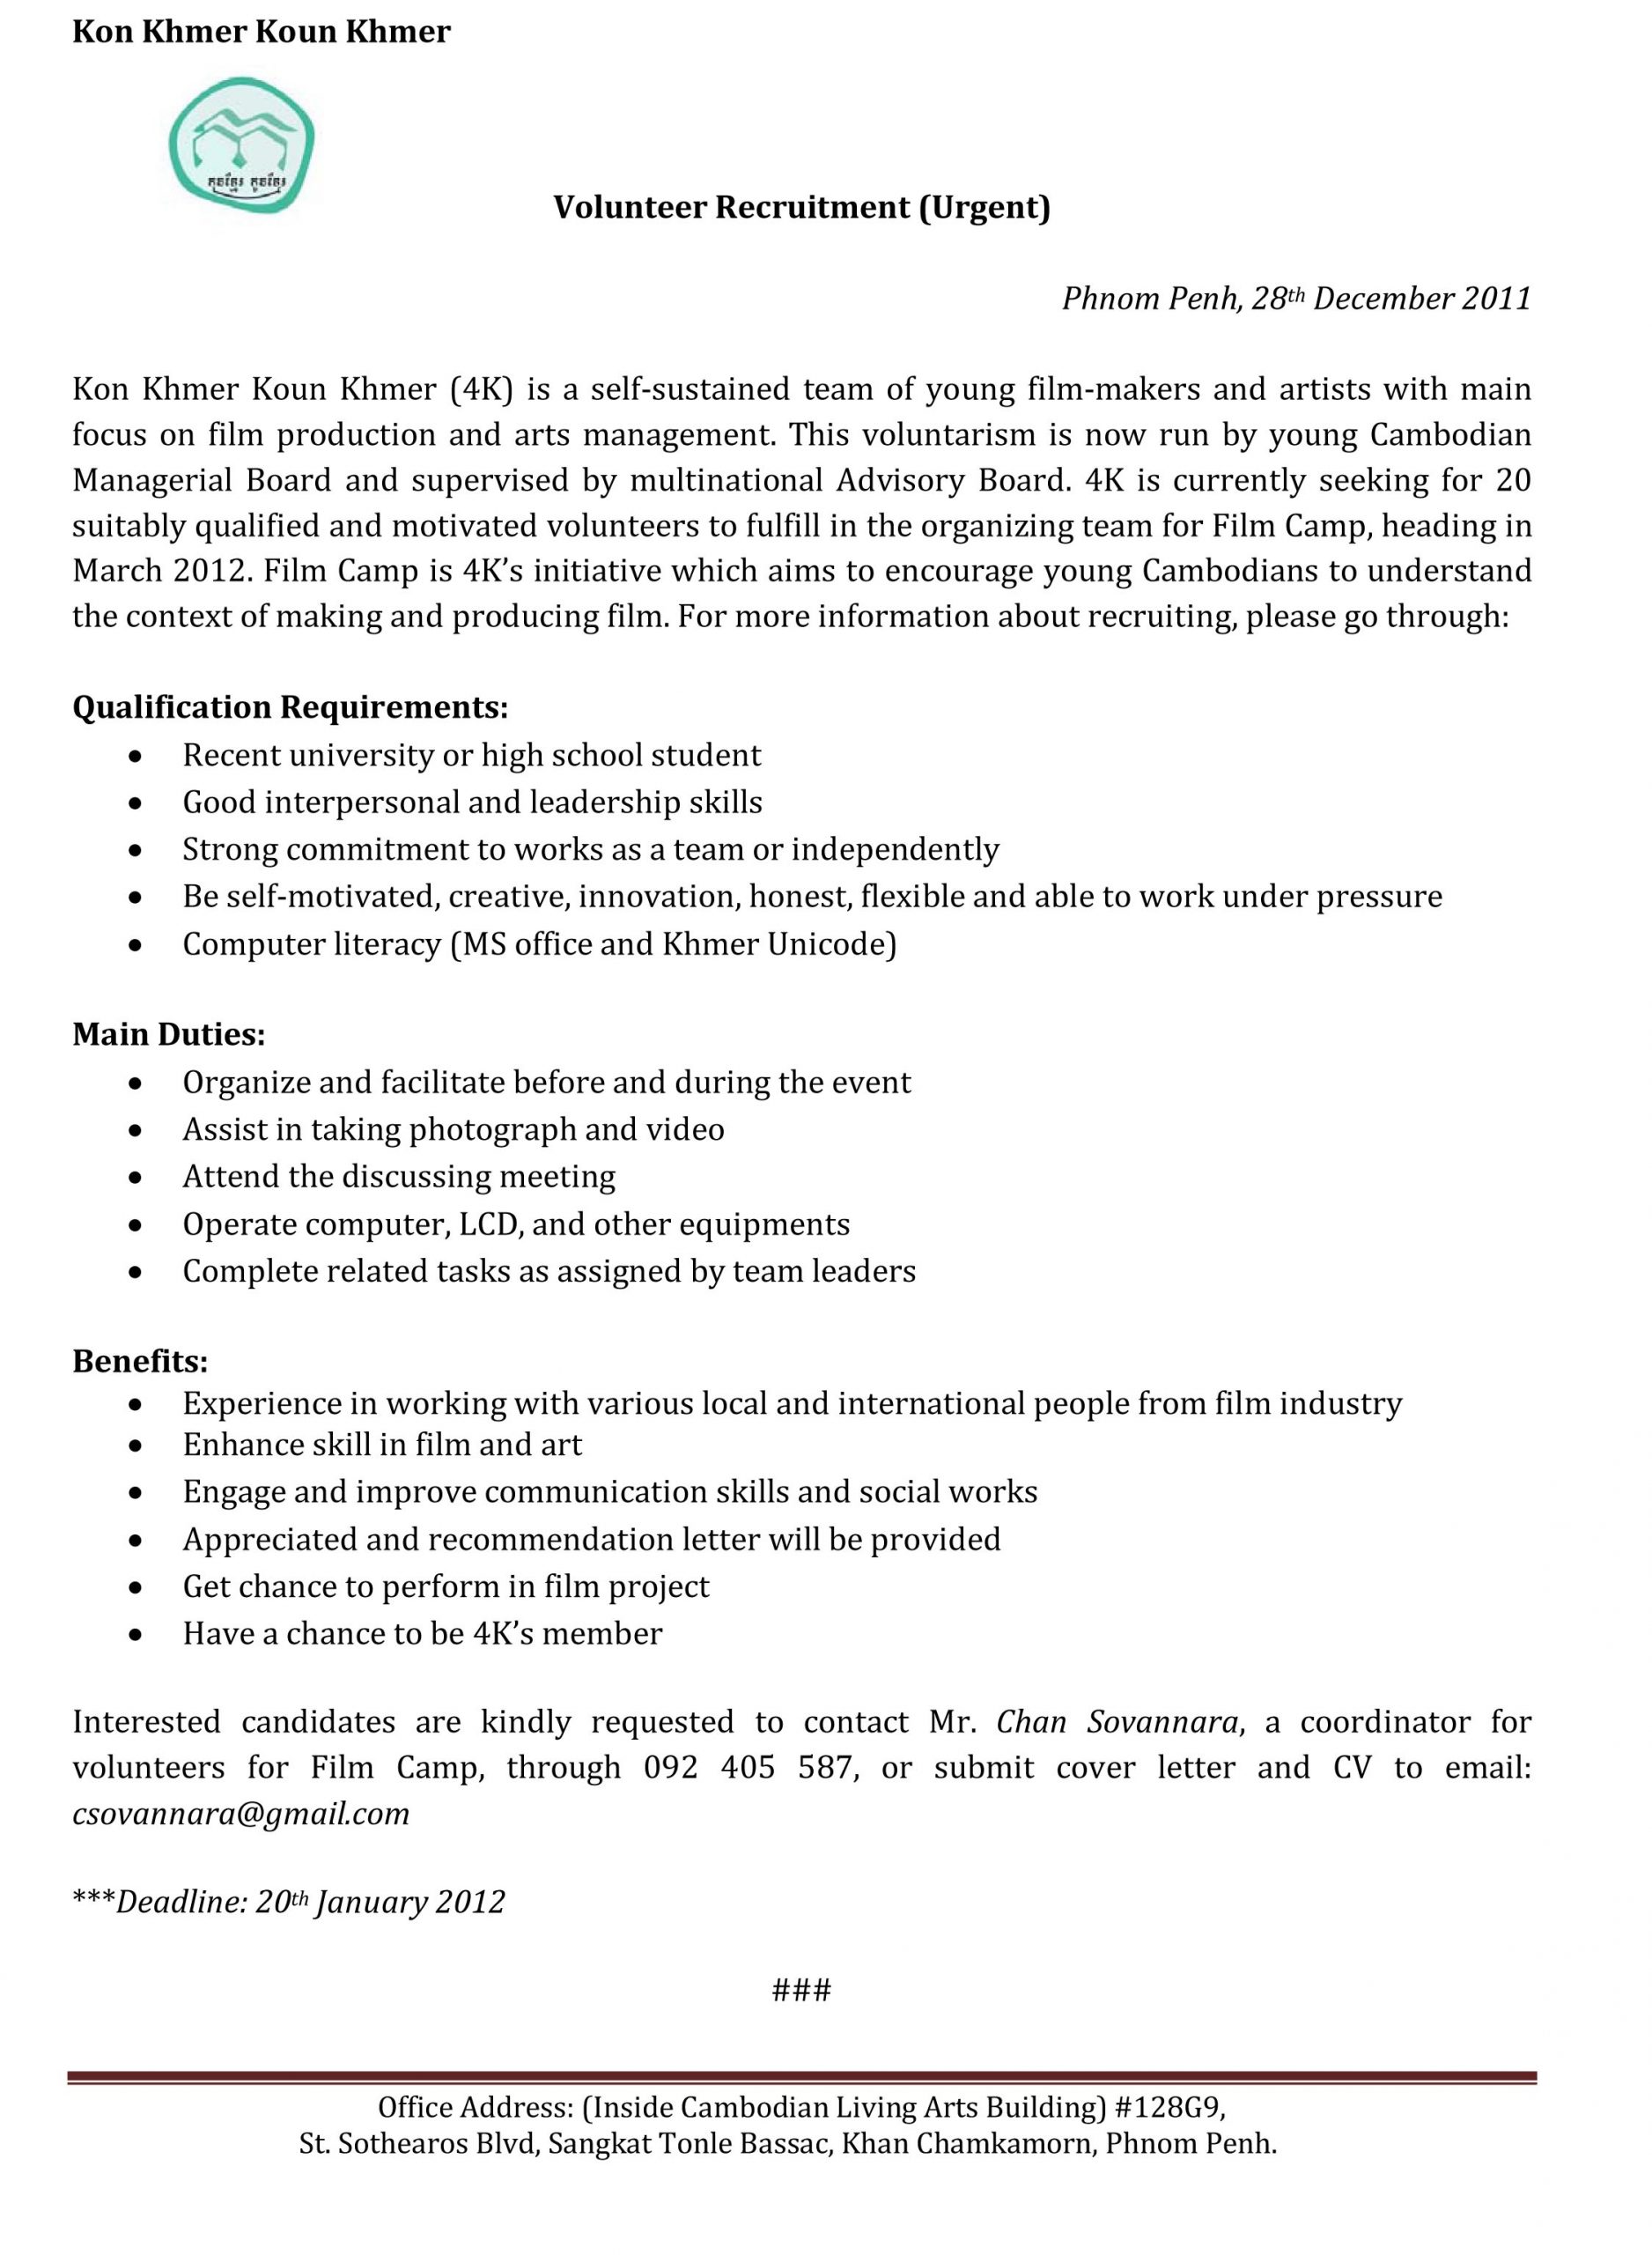 application letter for internship in ngo